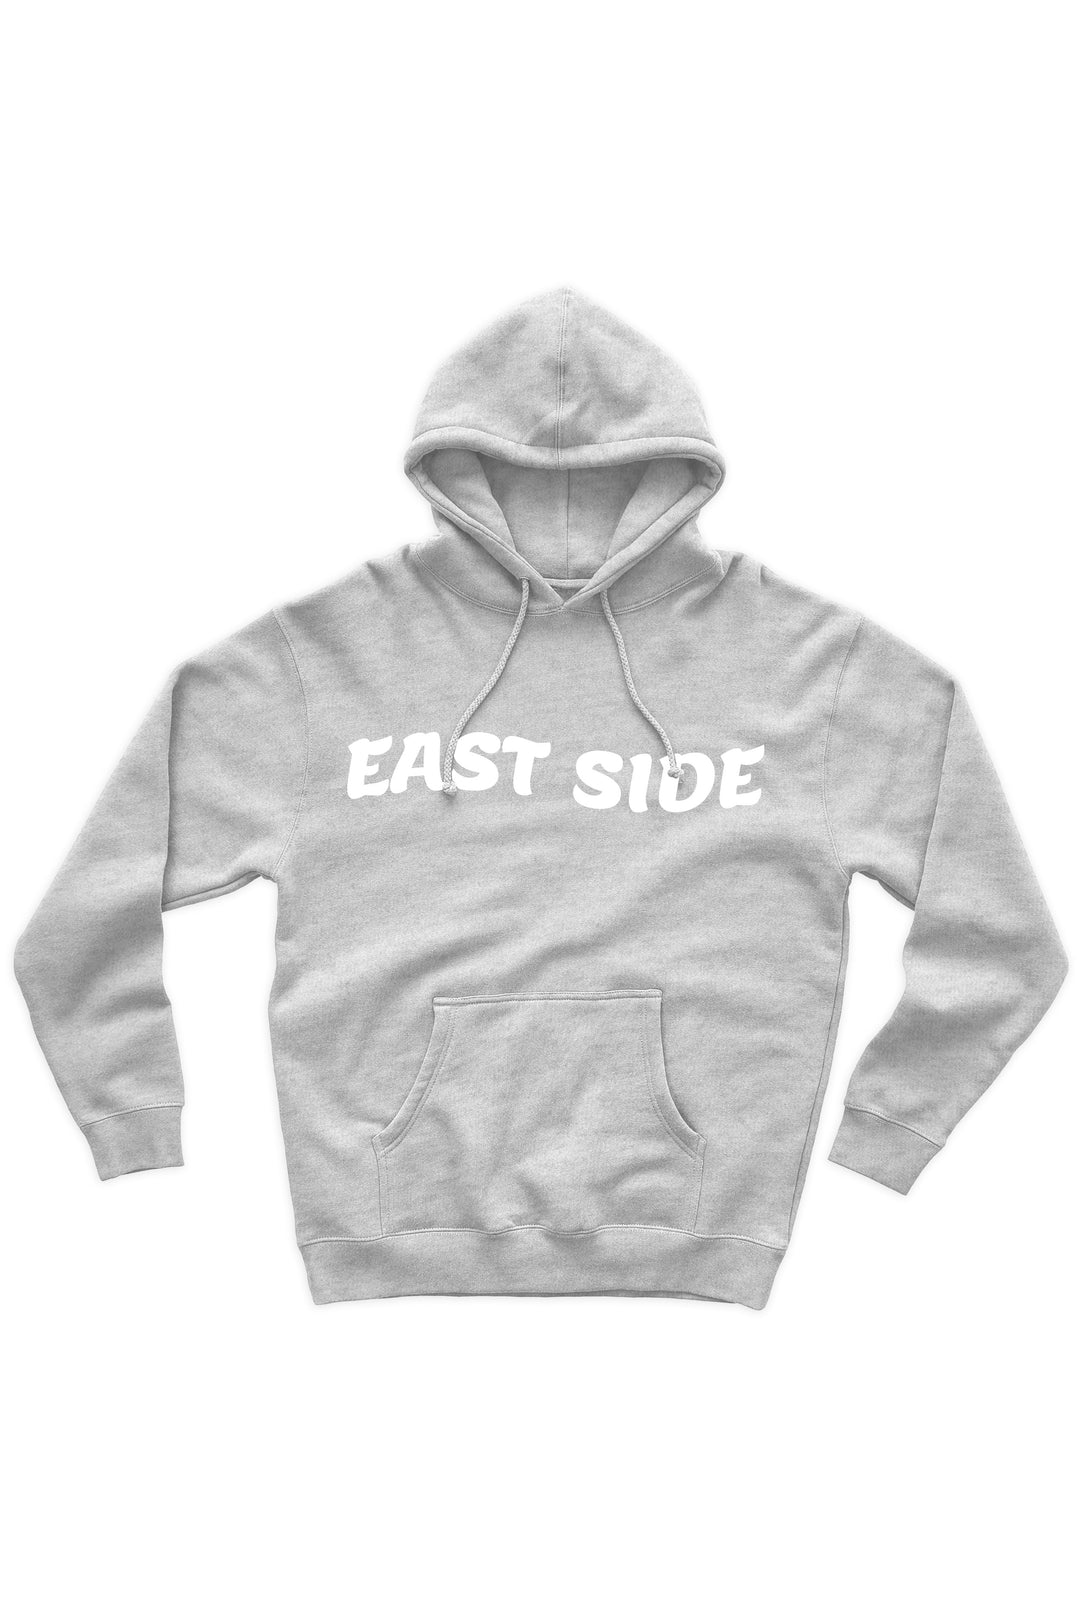 East Side Hoodie (White Logo) - Zamage